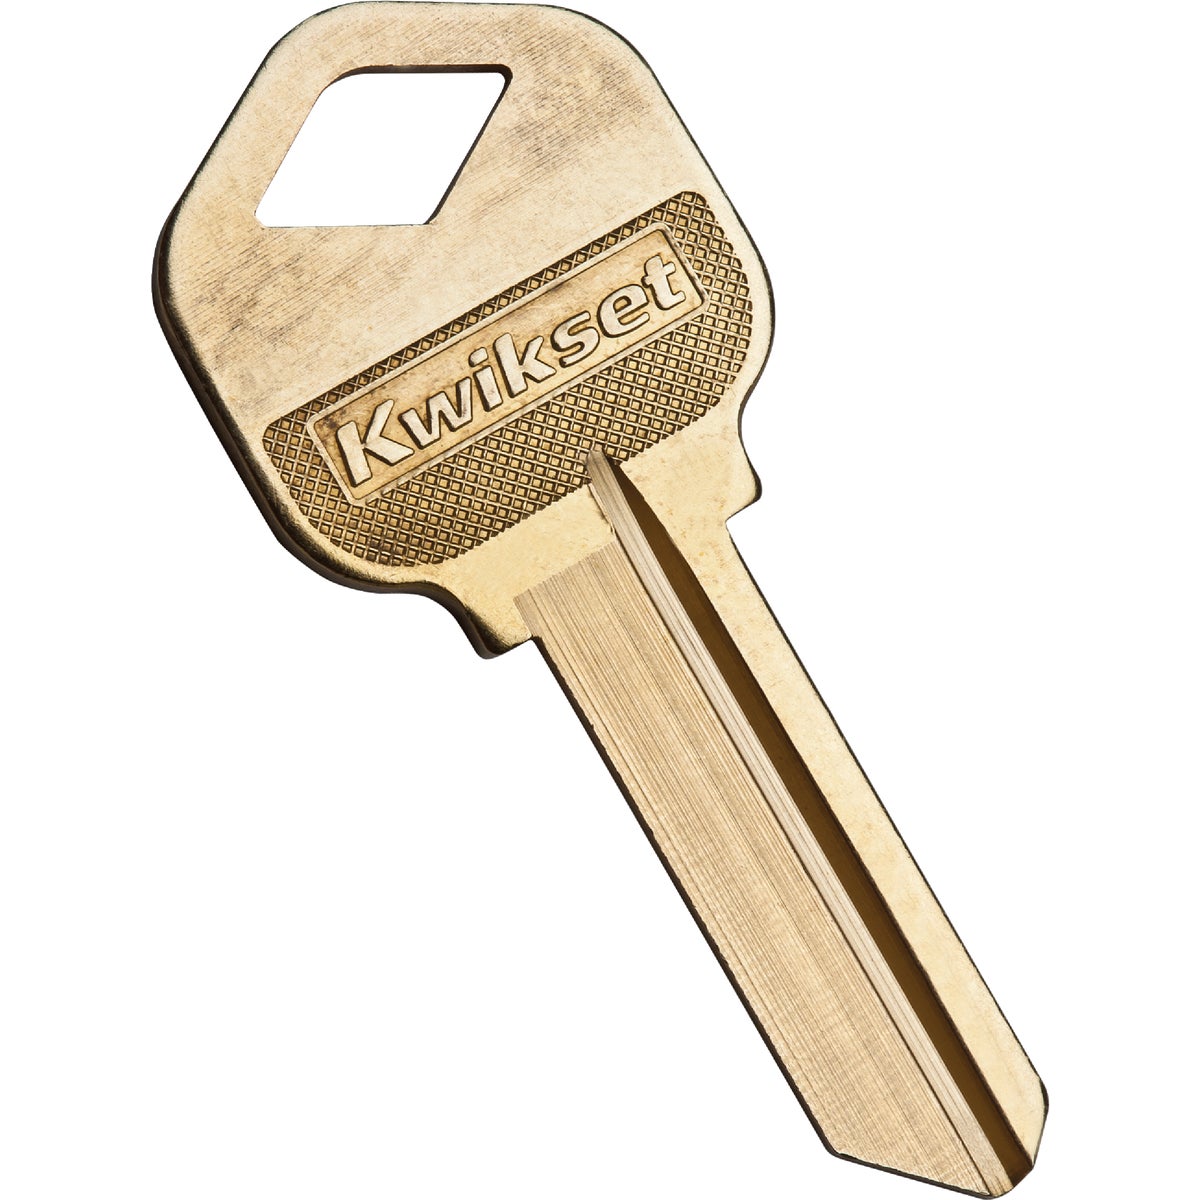 Item 227613, Original extra "K" key blank. Brass construction with nickel plating.